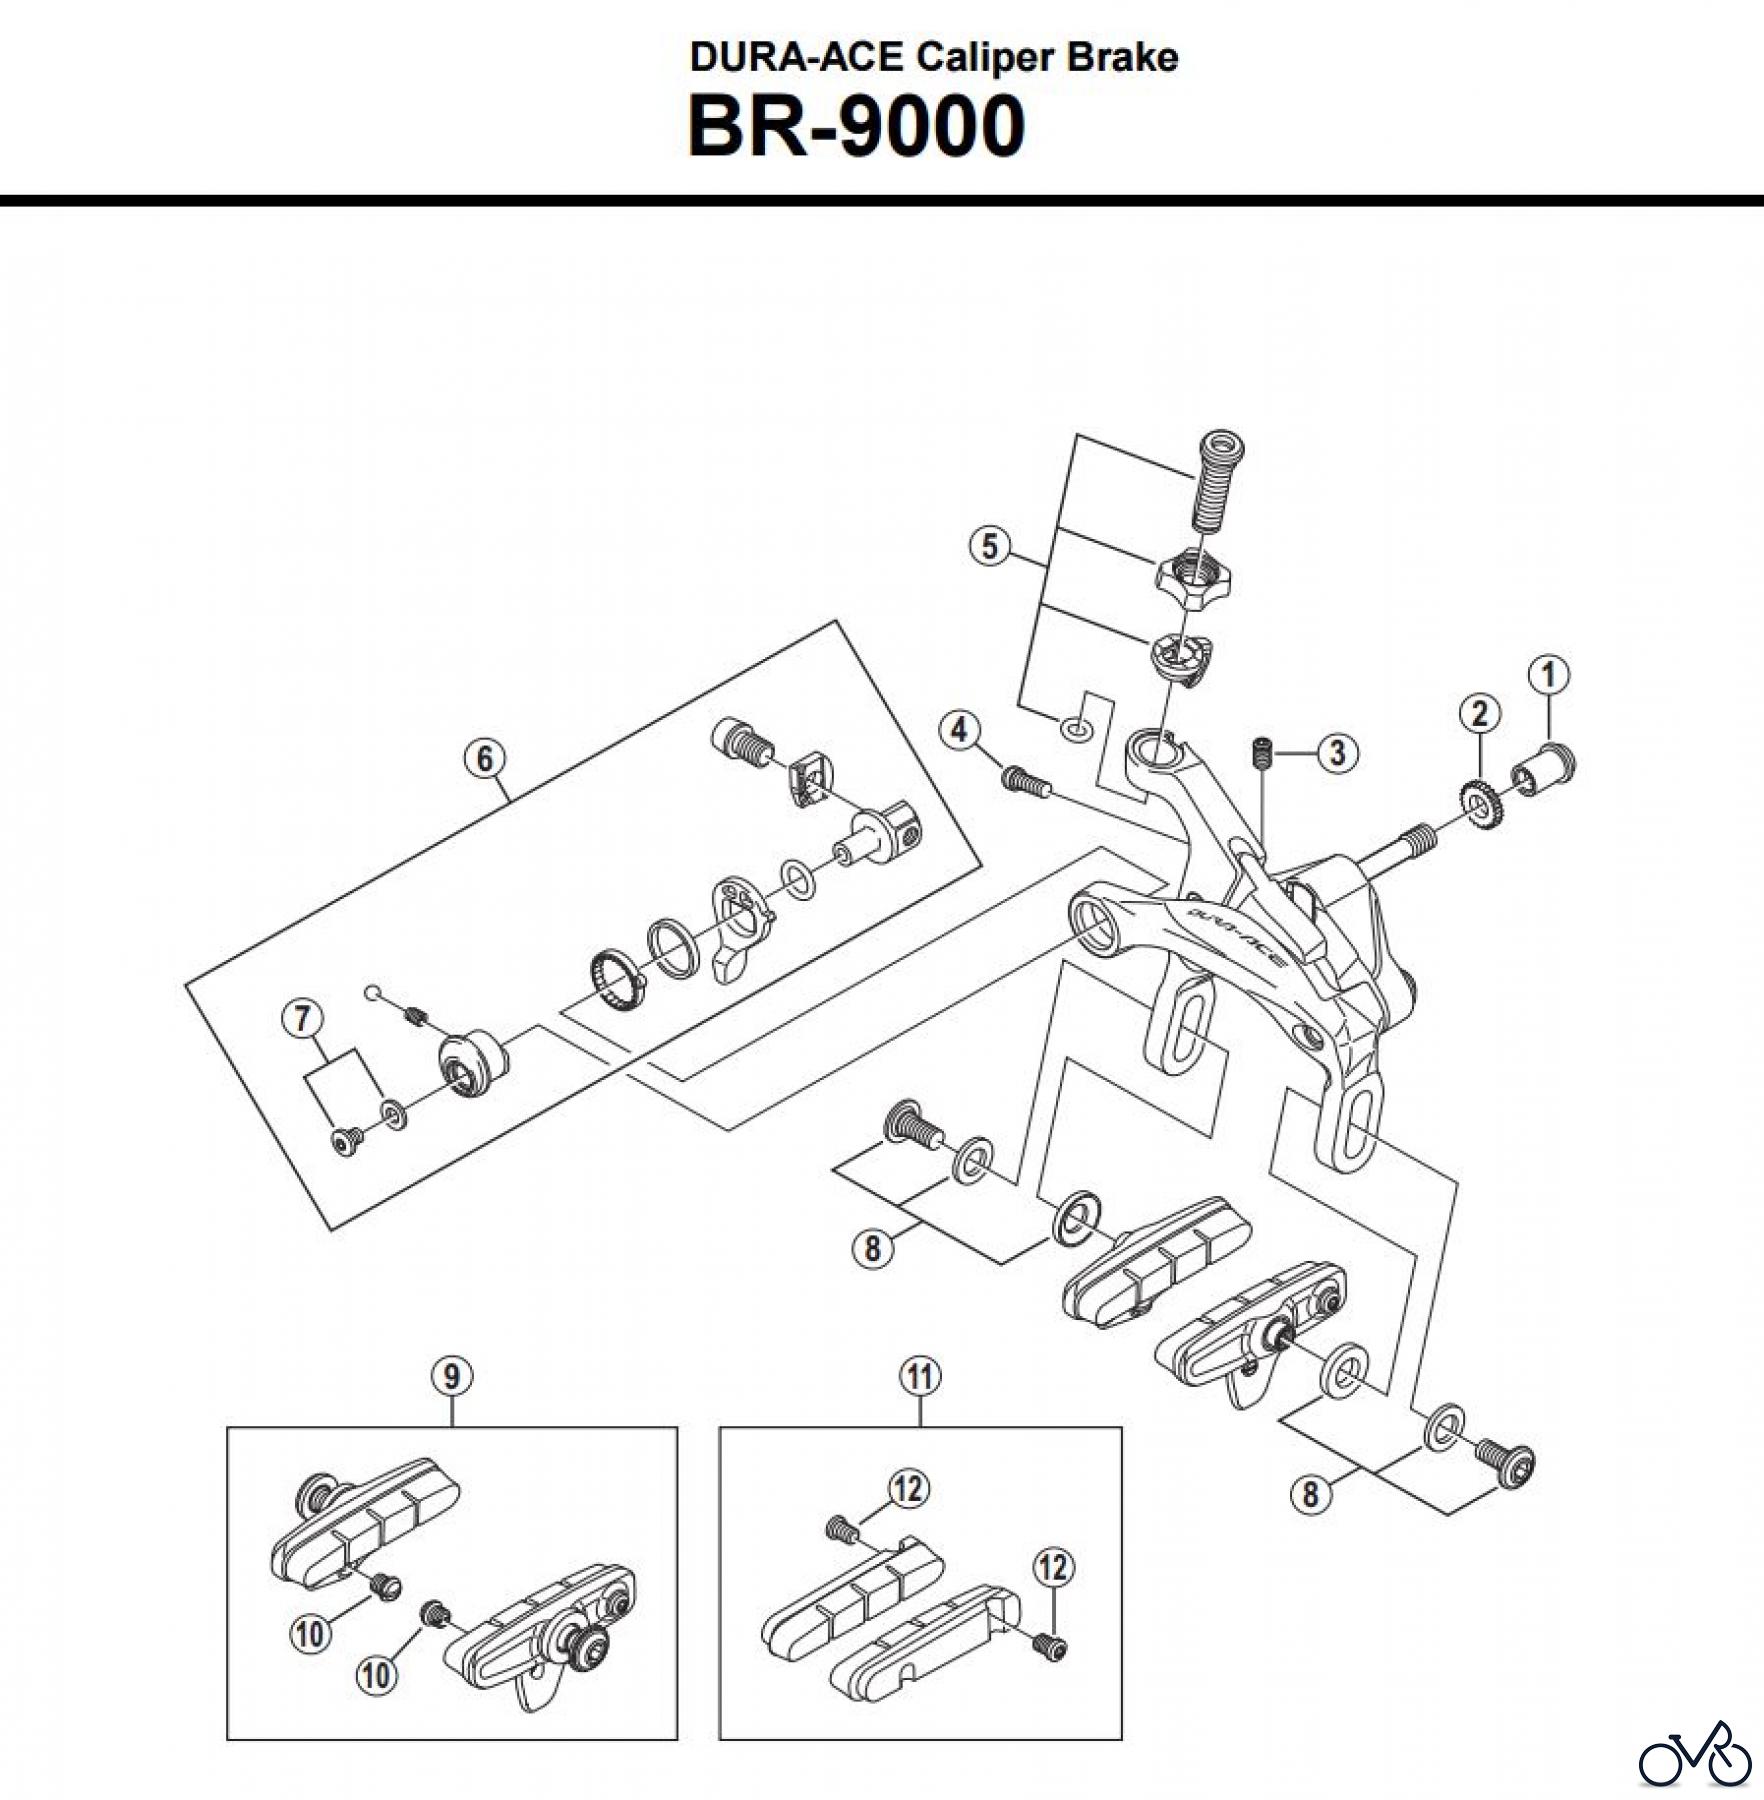  Shimano BR Brake - Bremse BR-9000 -3322C  DURA-ACE Caliper Brake